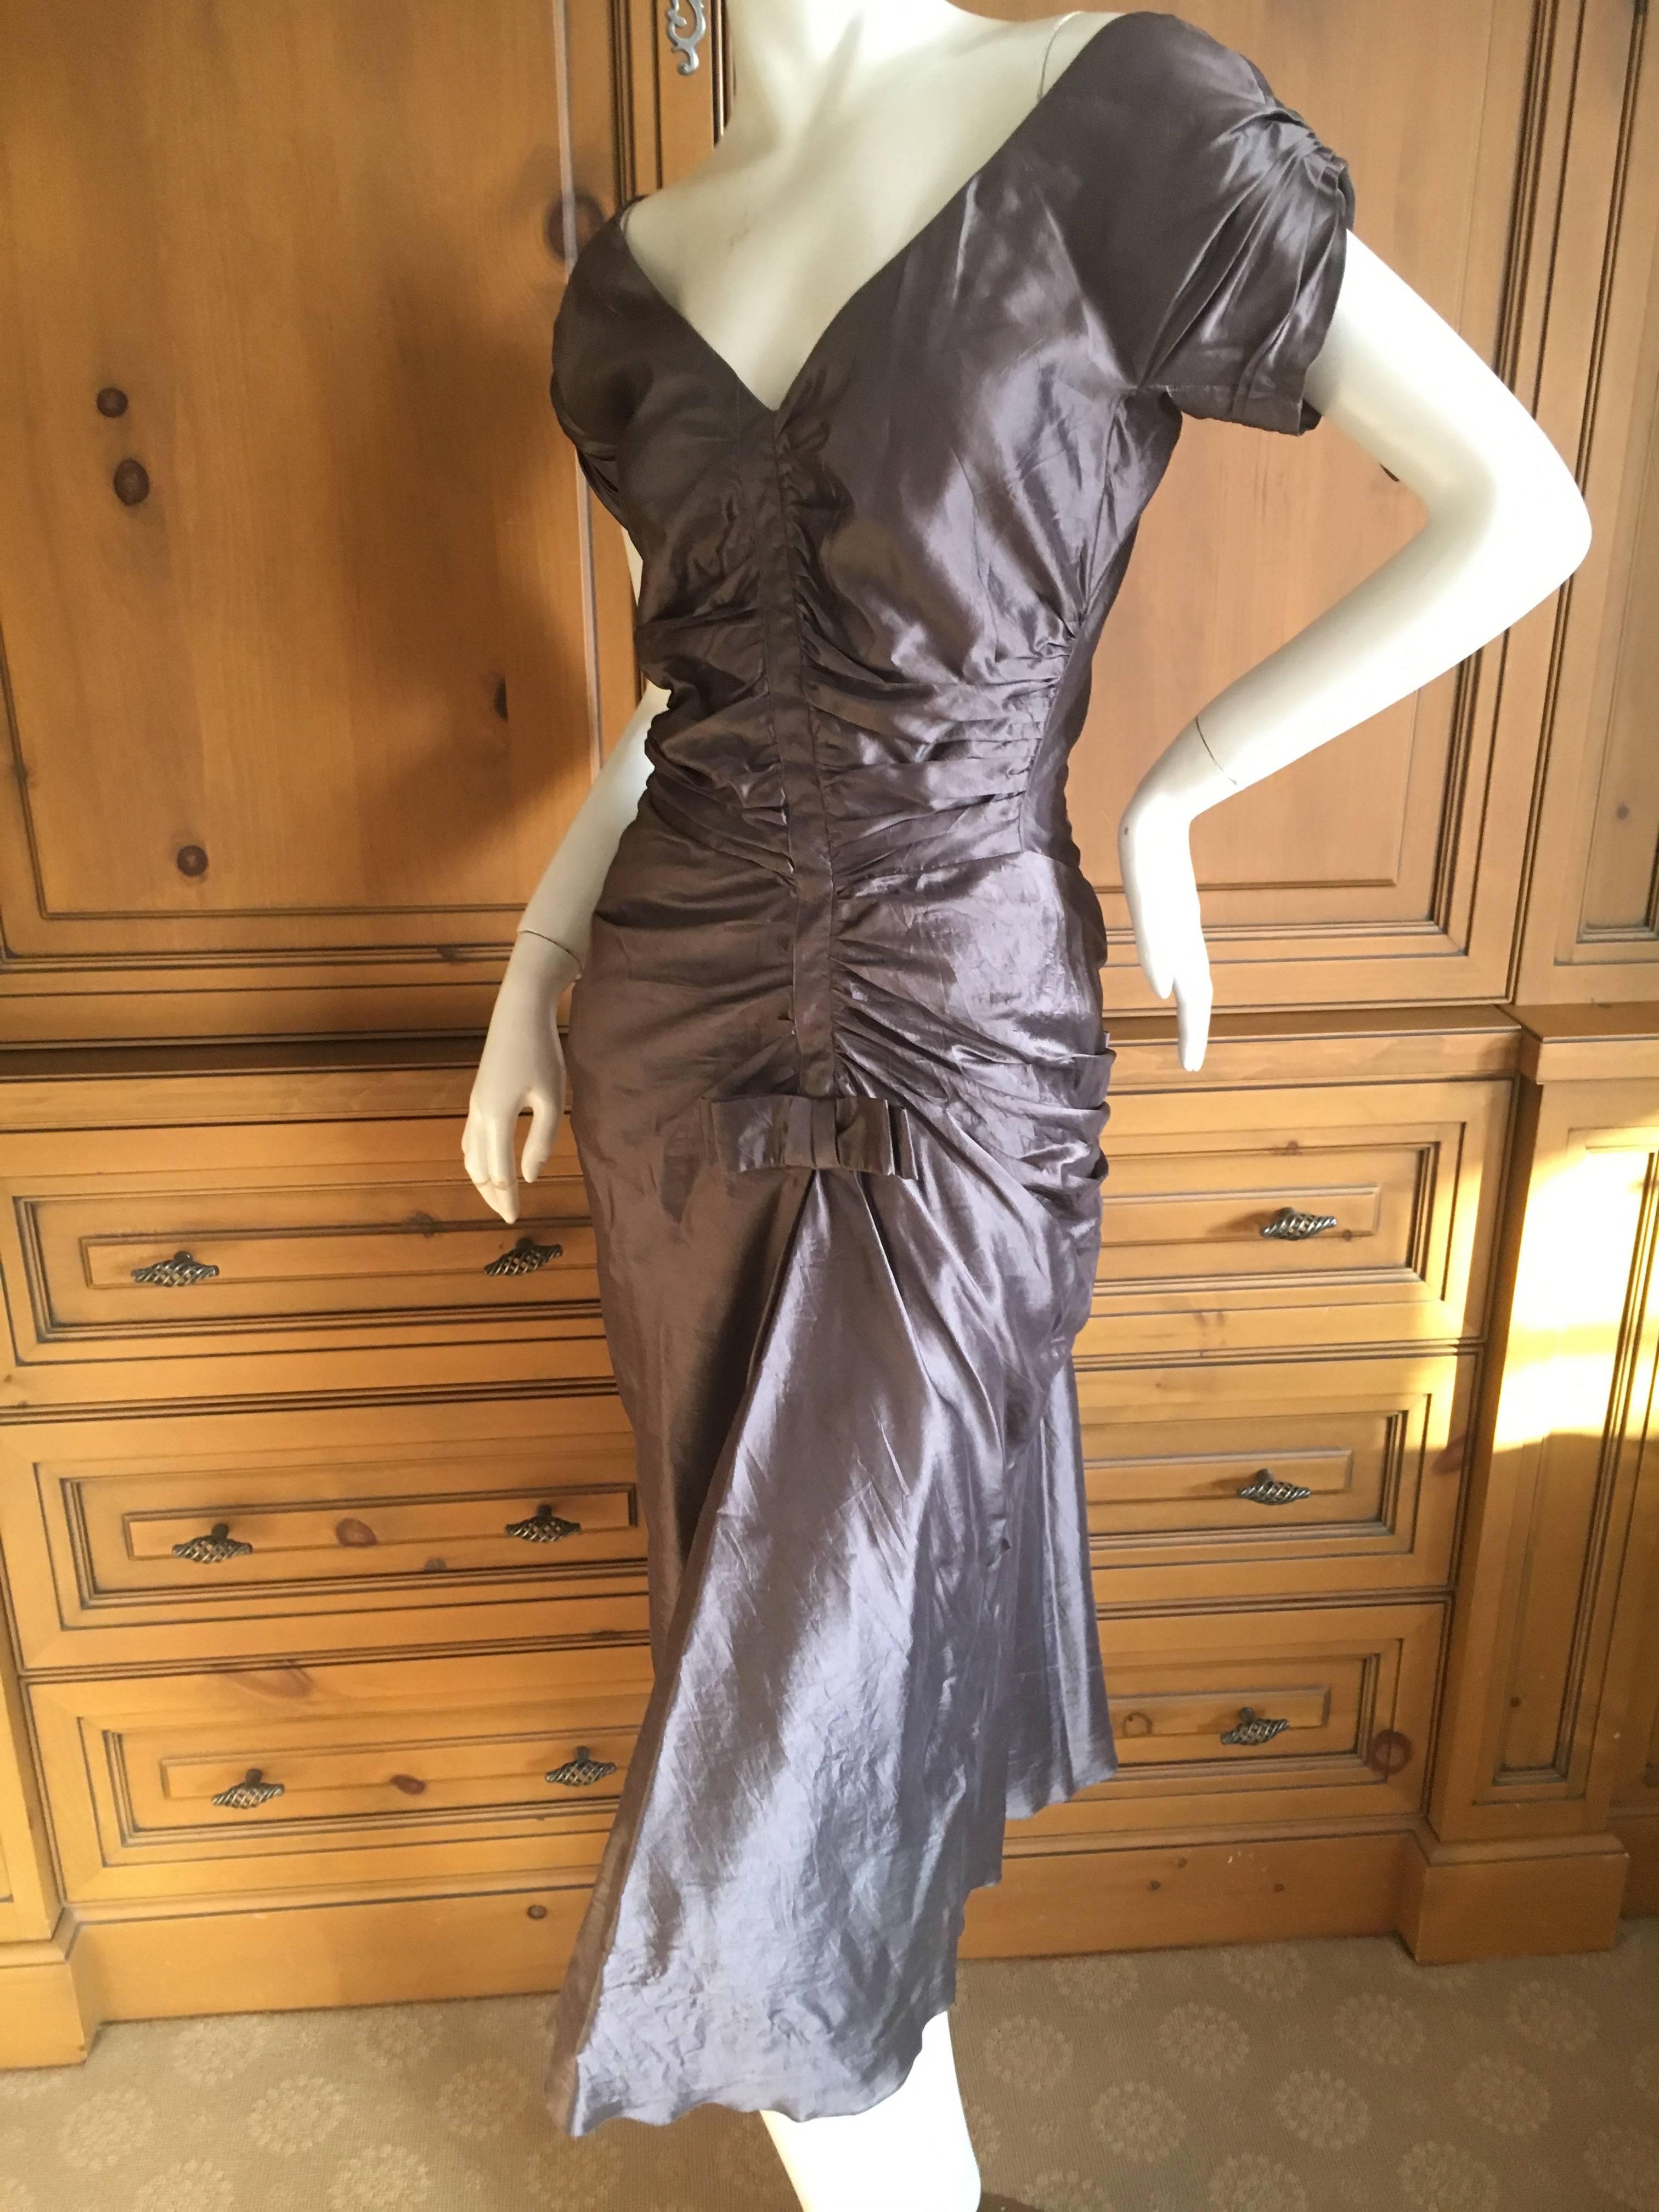 Christian Dior by John Galliano Gray Dupioni Silk 1940's Style Dress.
Wonderful gray dupioni silk dress with back bow by John Galliano for Christian Dior.
Size 38
Bust 36